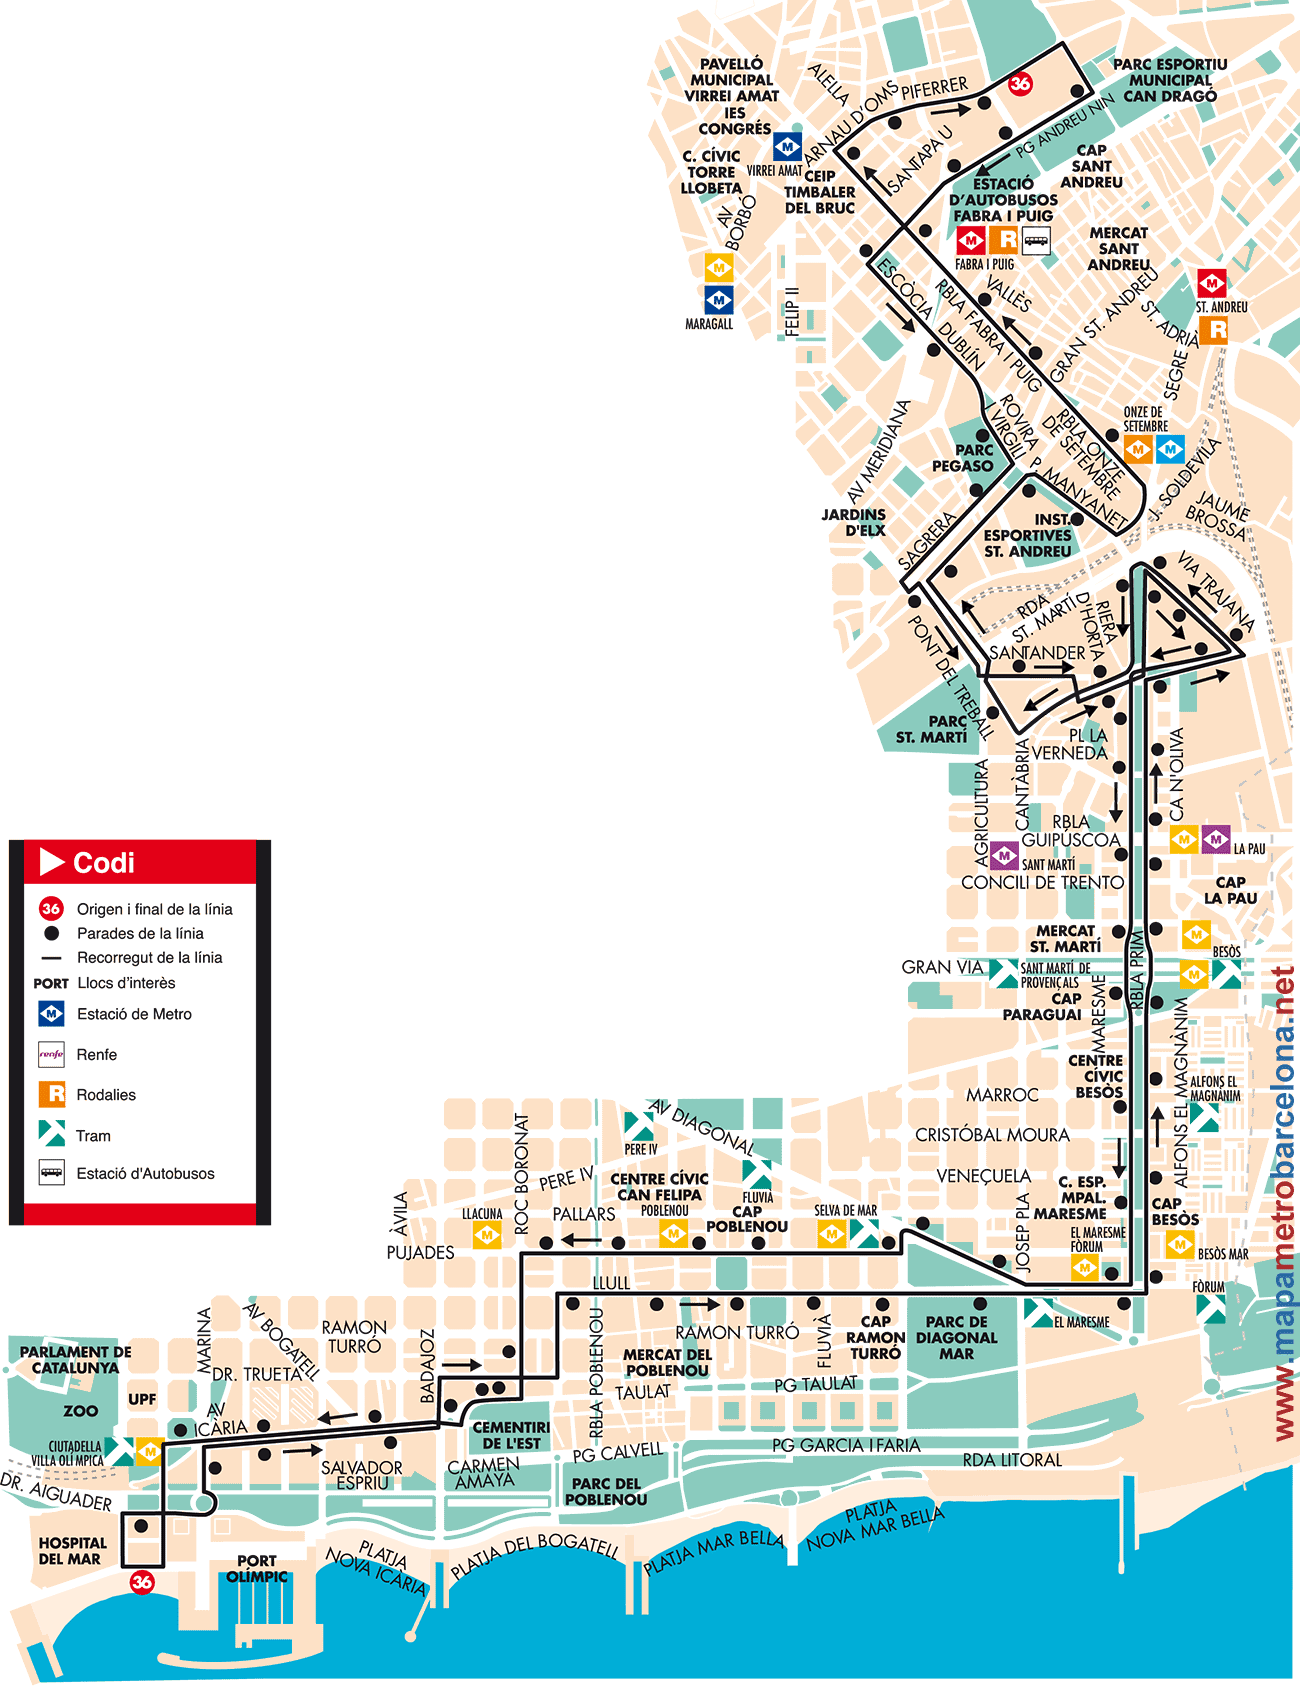 Barcelona bus map line 36